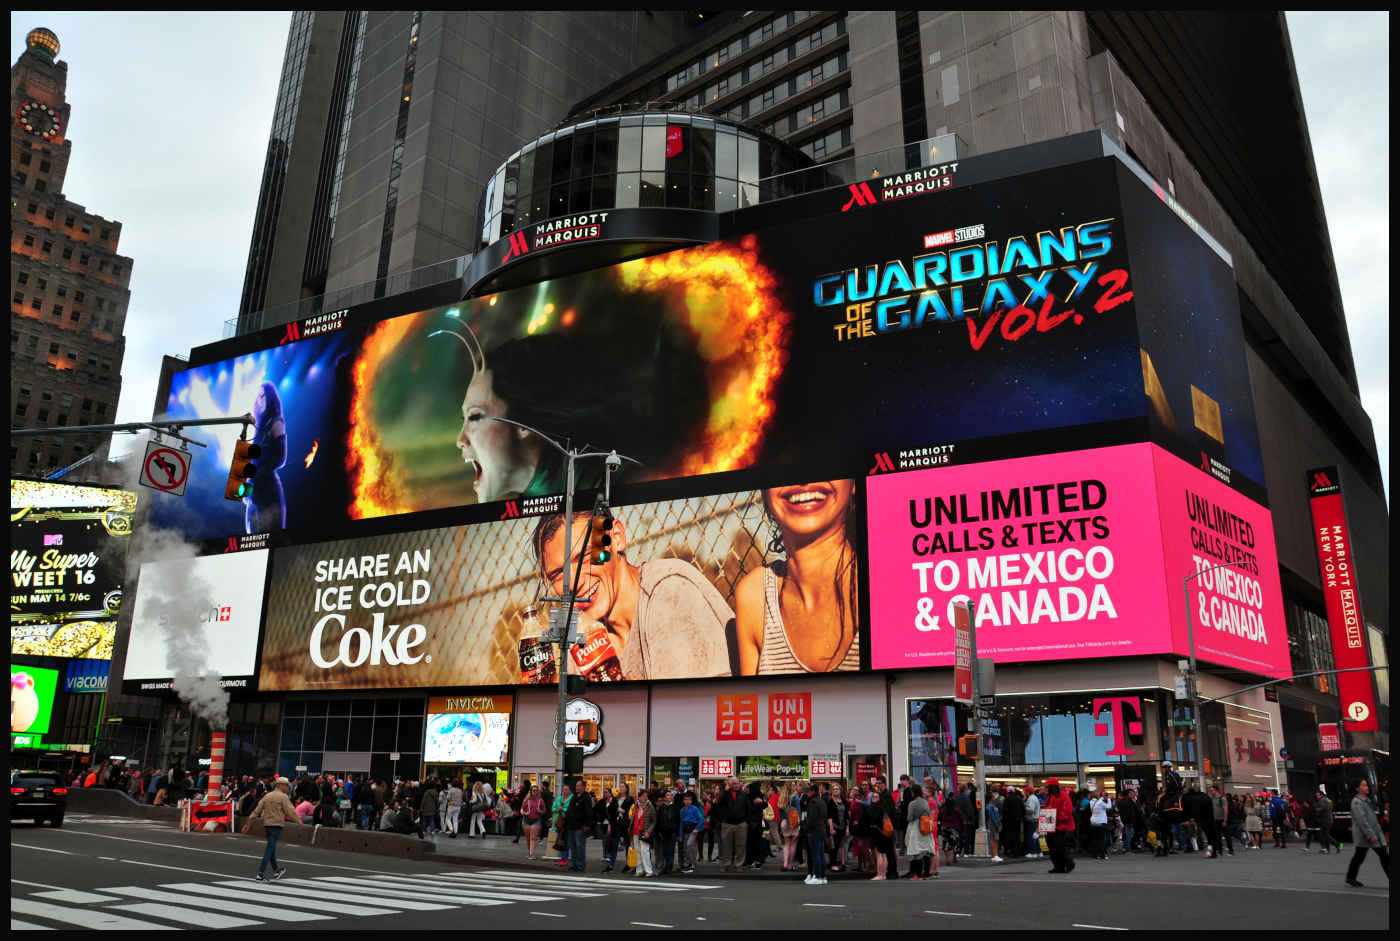 Pantalla gigante en Times Square